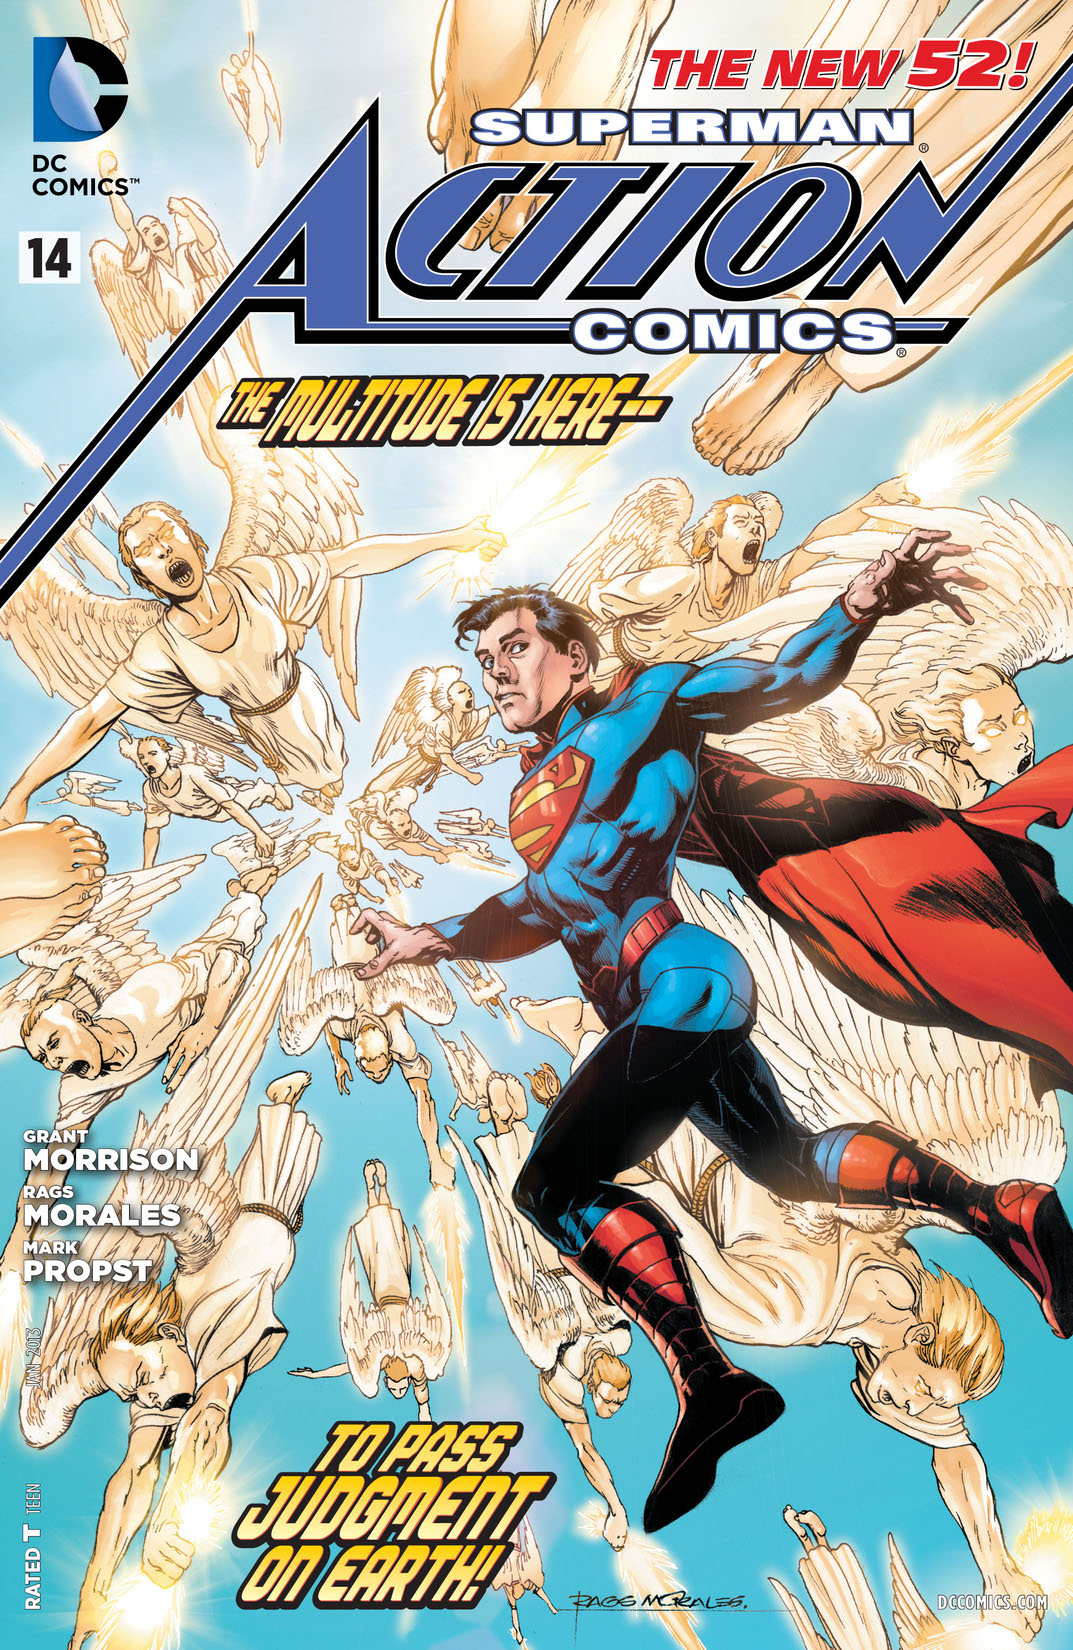 Action Comics (2011-) #14 preview images